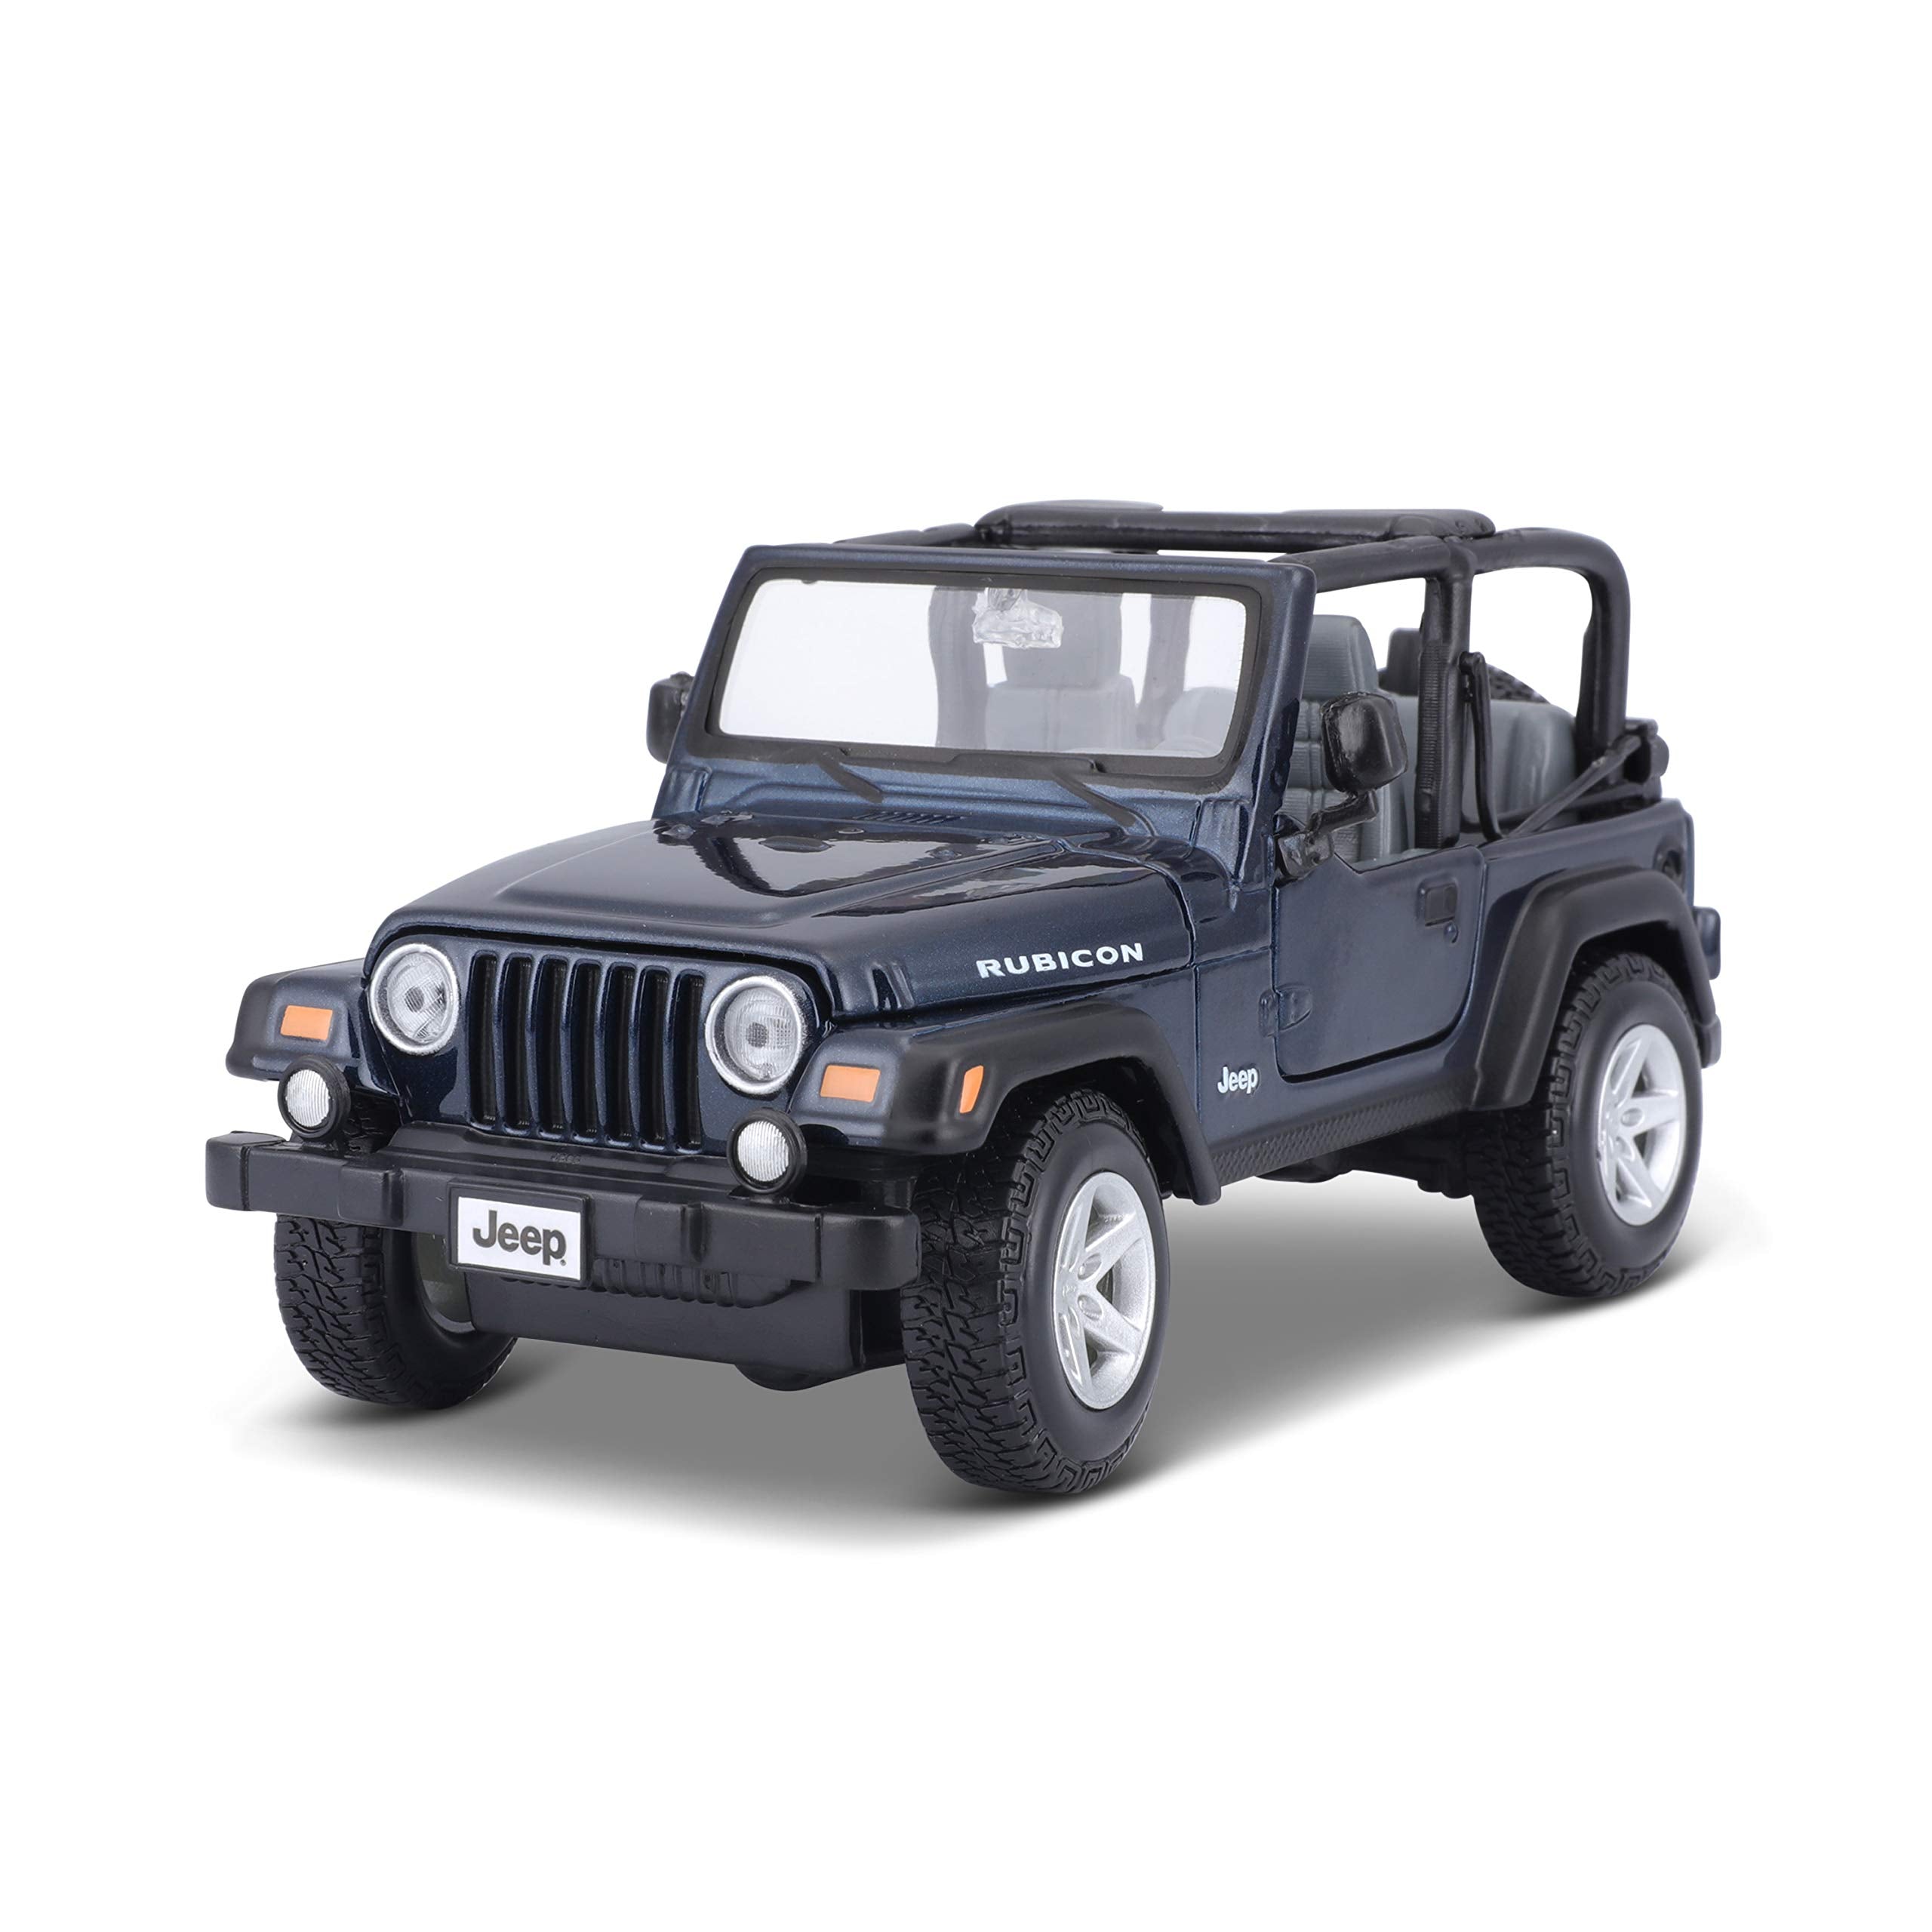 Maisto-1:27 Special Edition Jeep Wrangler Rubicon-31245-Legacy Toys